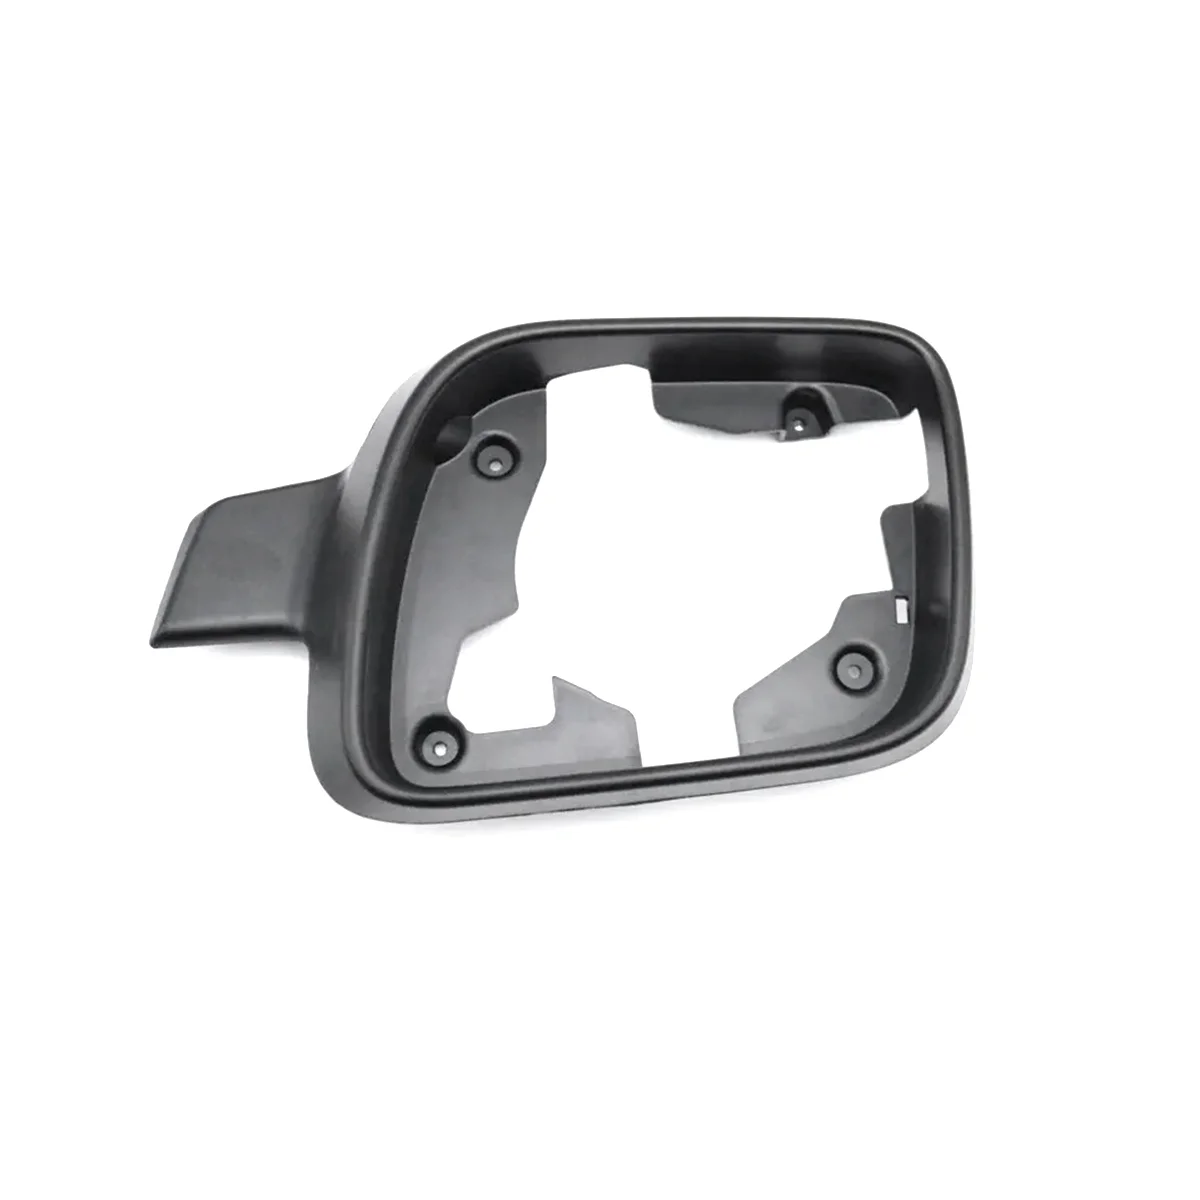 Накладка корпуса рамы левого бокового зеркала для Ford Explorer 2011-2019 Версия для США